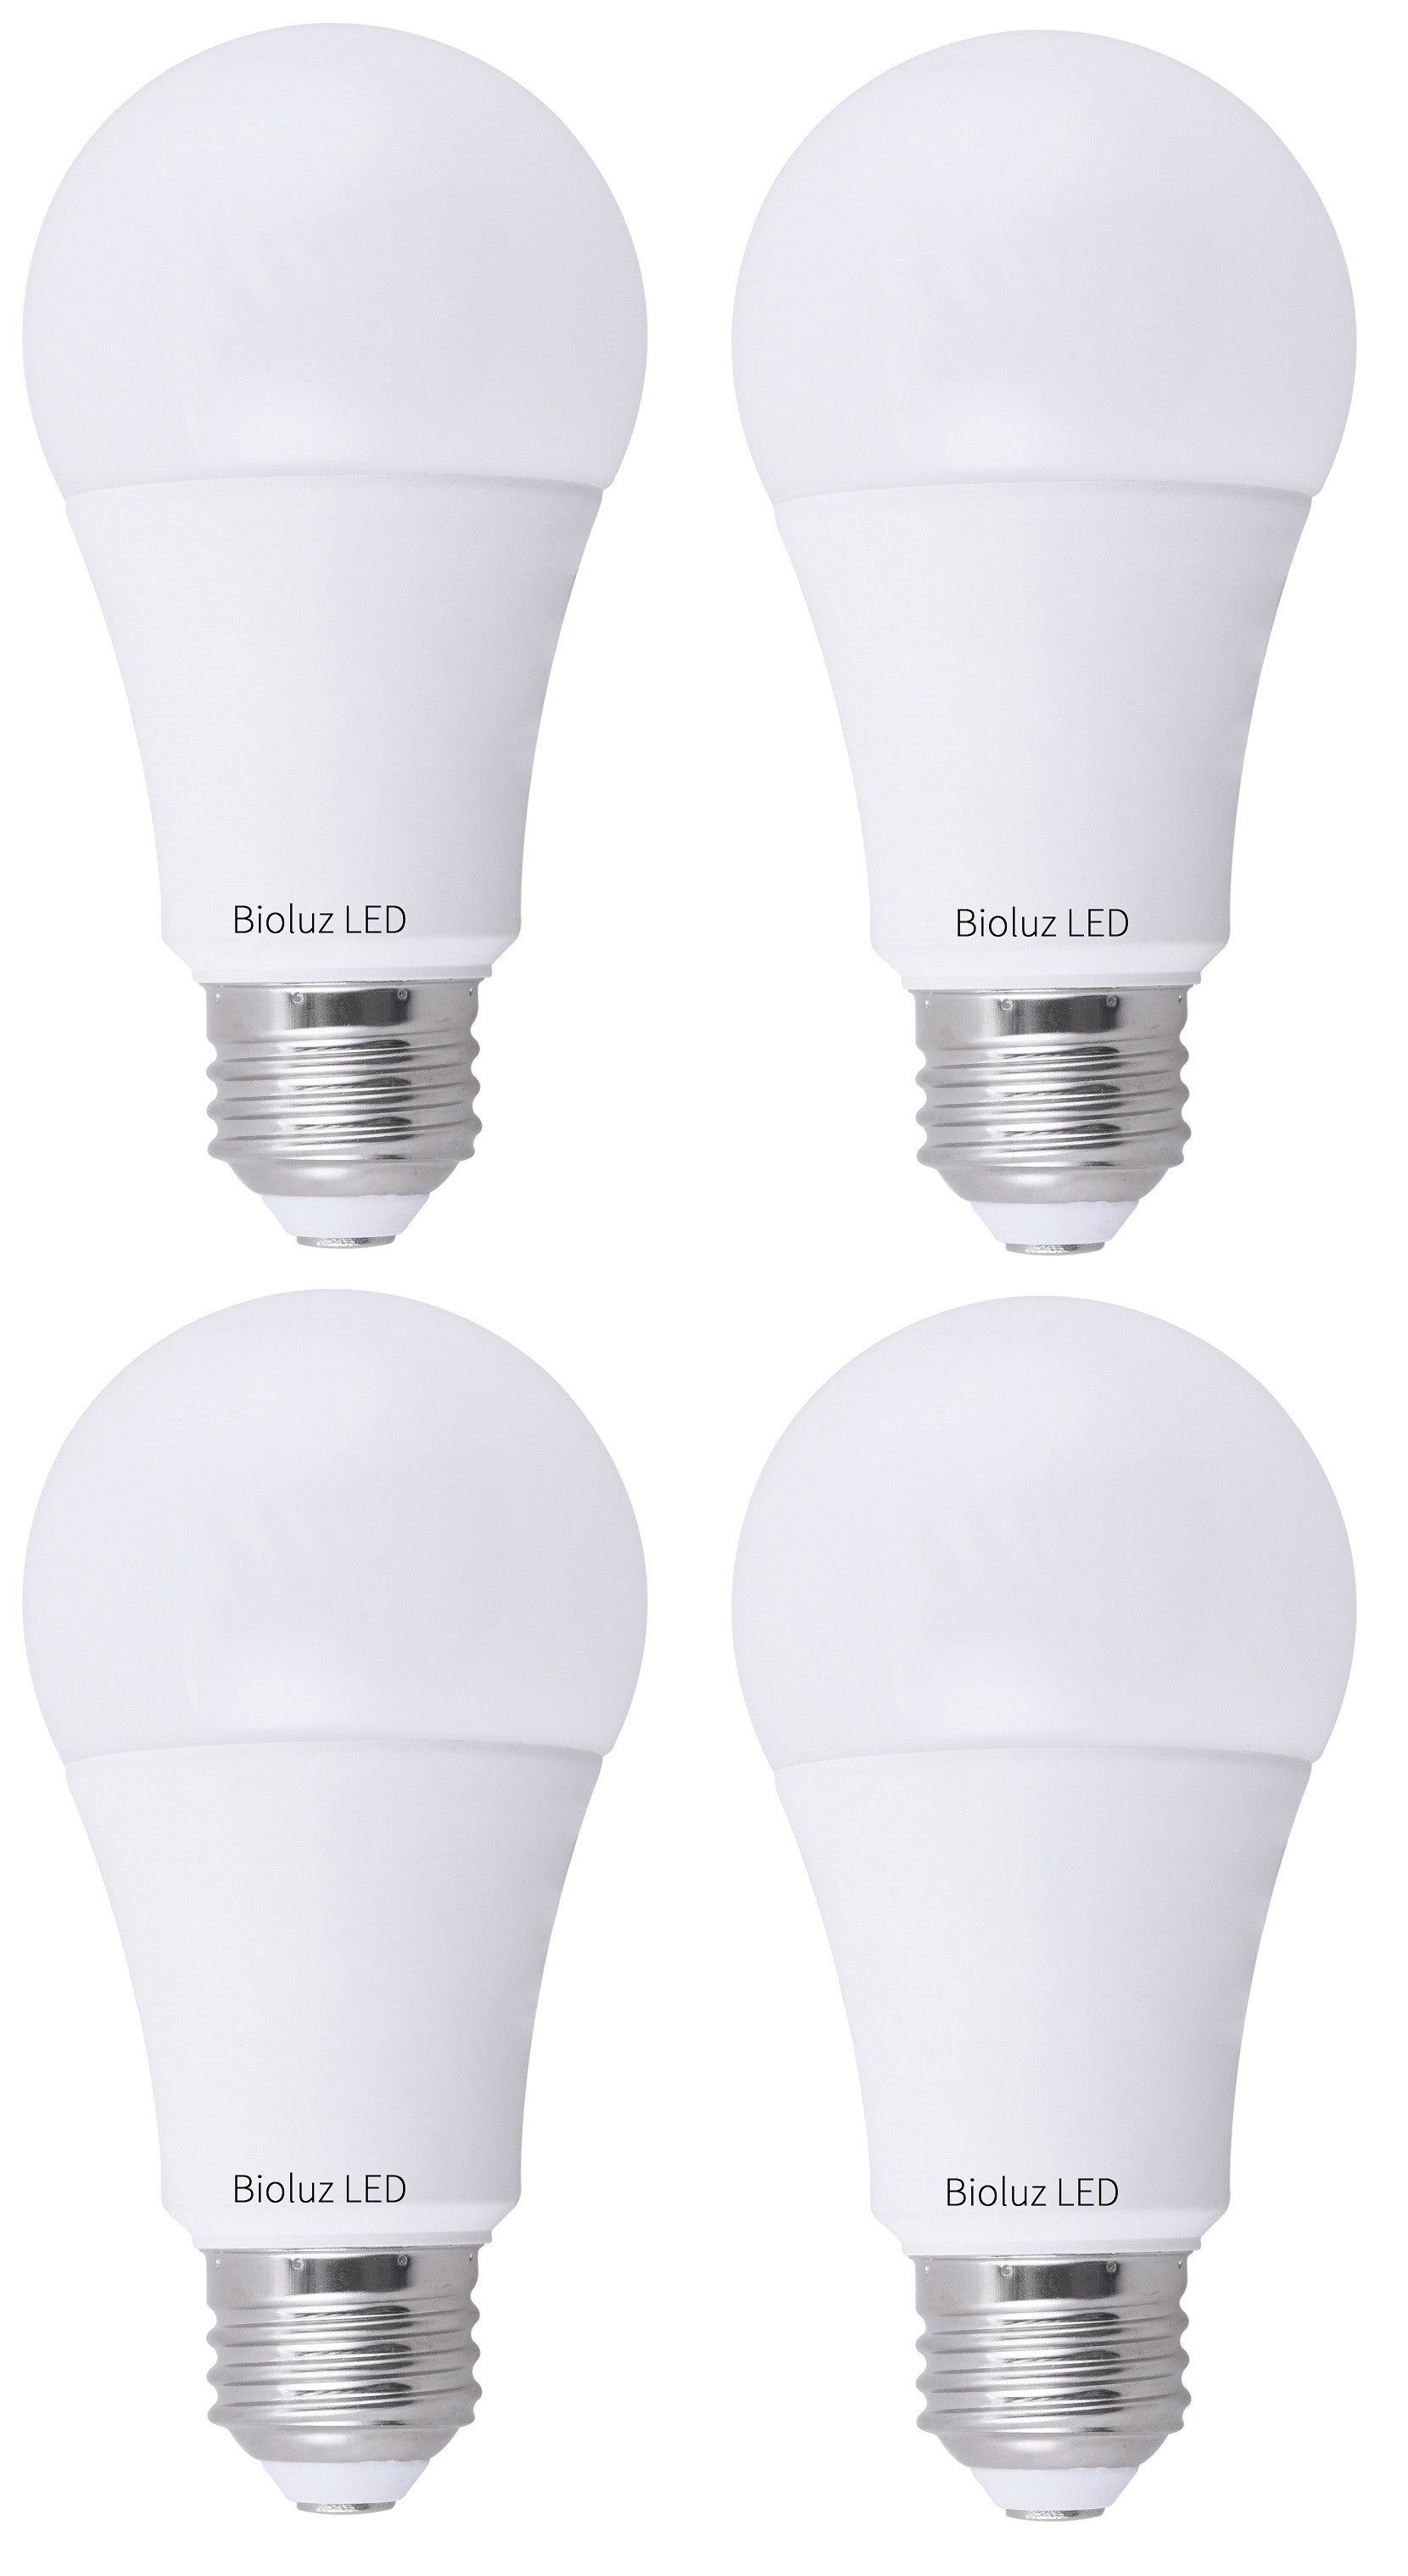 Urskive Betydning sko Bioluz LED A21 100W Dimmable LED Light Bulbs 1600 Lumen 3000K